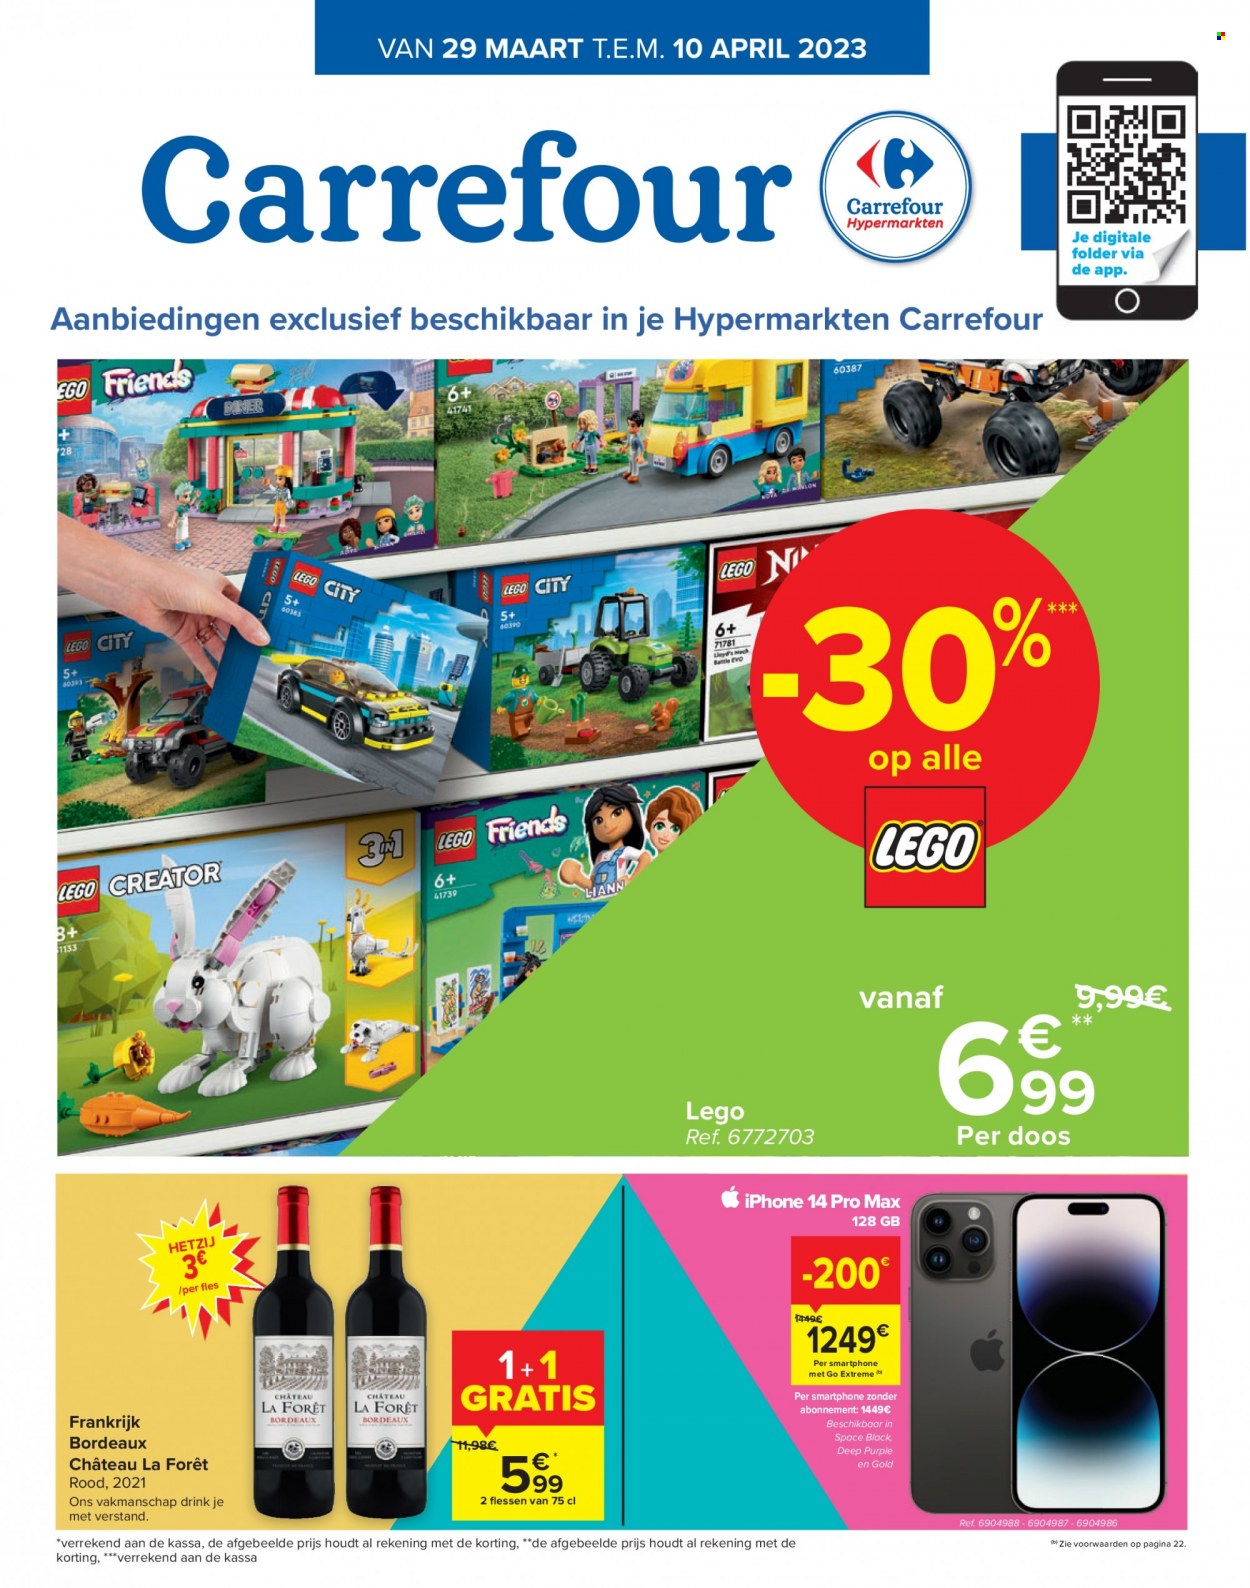 thumbnail - Carrefour hypermarkt-aanbieding - 29/03/2023 - 10/04/2023 -  producten in de aanbieding - Bordeaux, Frankrijk, smartphone, iPhone, LEGO, LEGO City, LEGO Creator, LEGO Friends. Pagina 1.